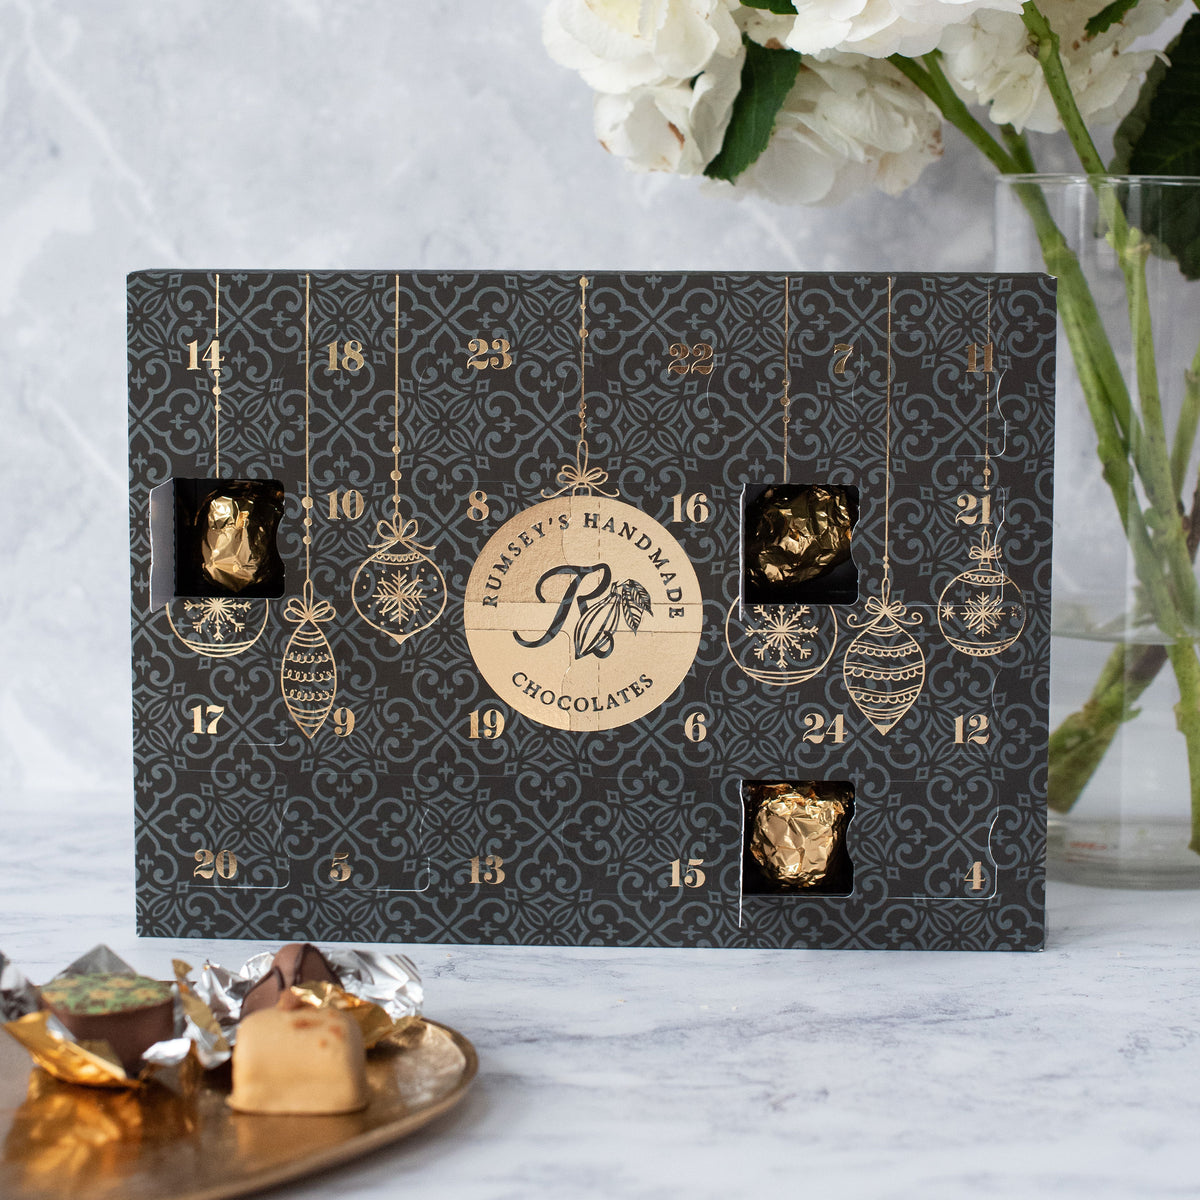 Luxury Chocolate Advent Calendar Rumsey's Handmade Chocolates